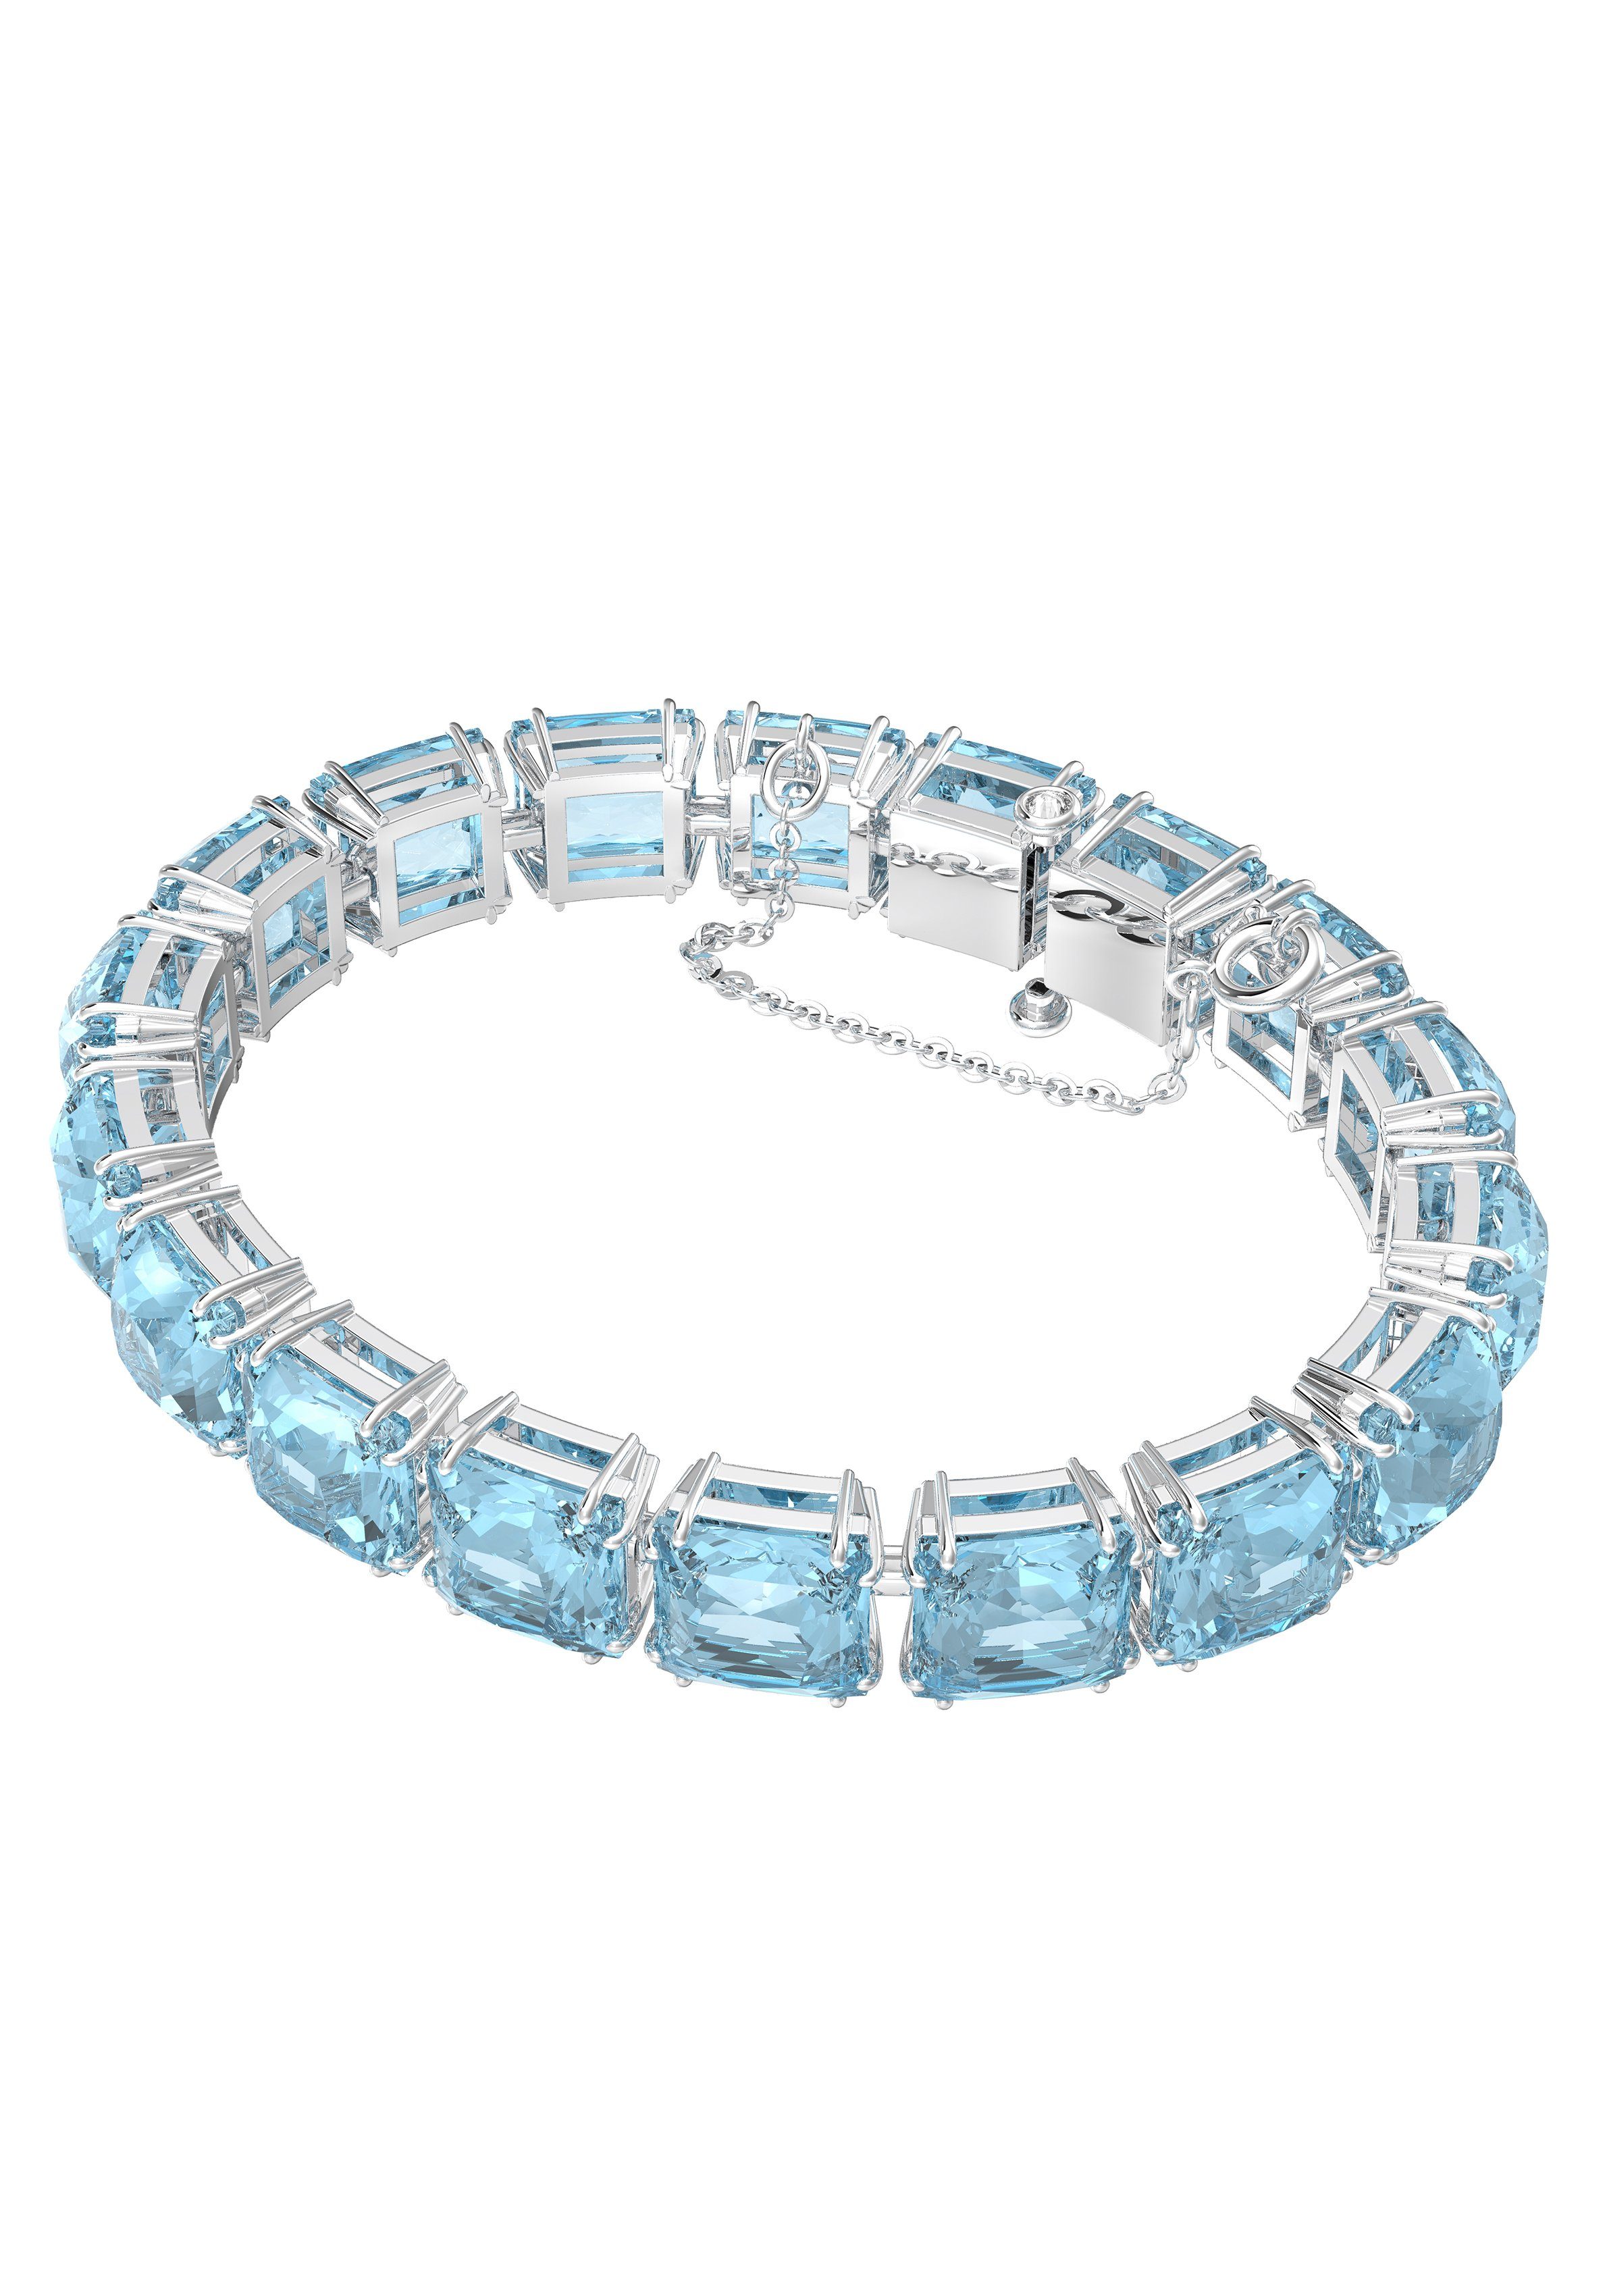 Swarovski Armband Millenia, Kristalle im Quadrat Schliff, 5612682, 5614924, mit Swarovski® Kristall metallfarben-blau